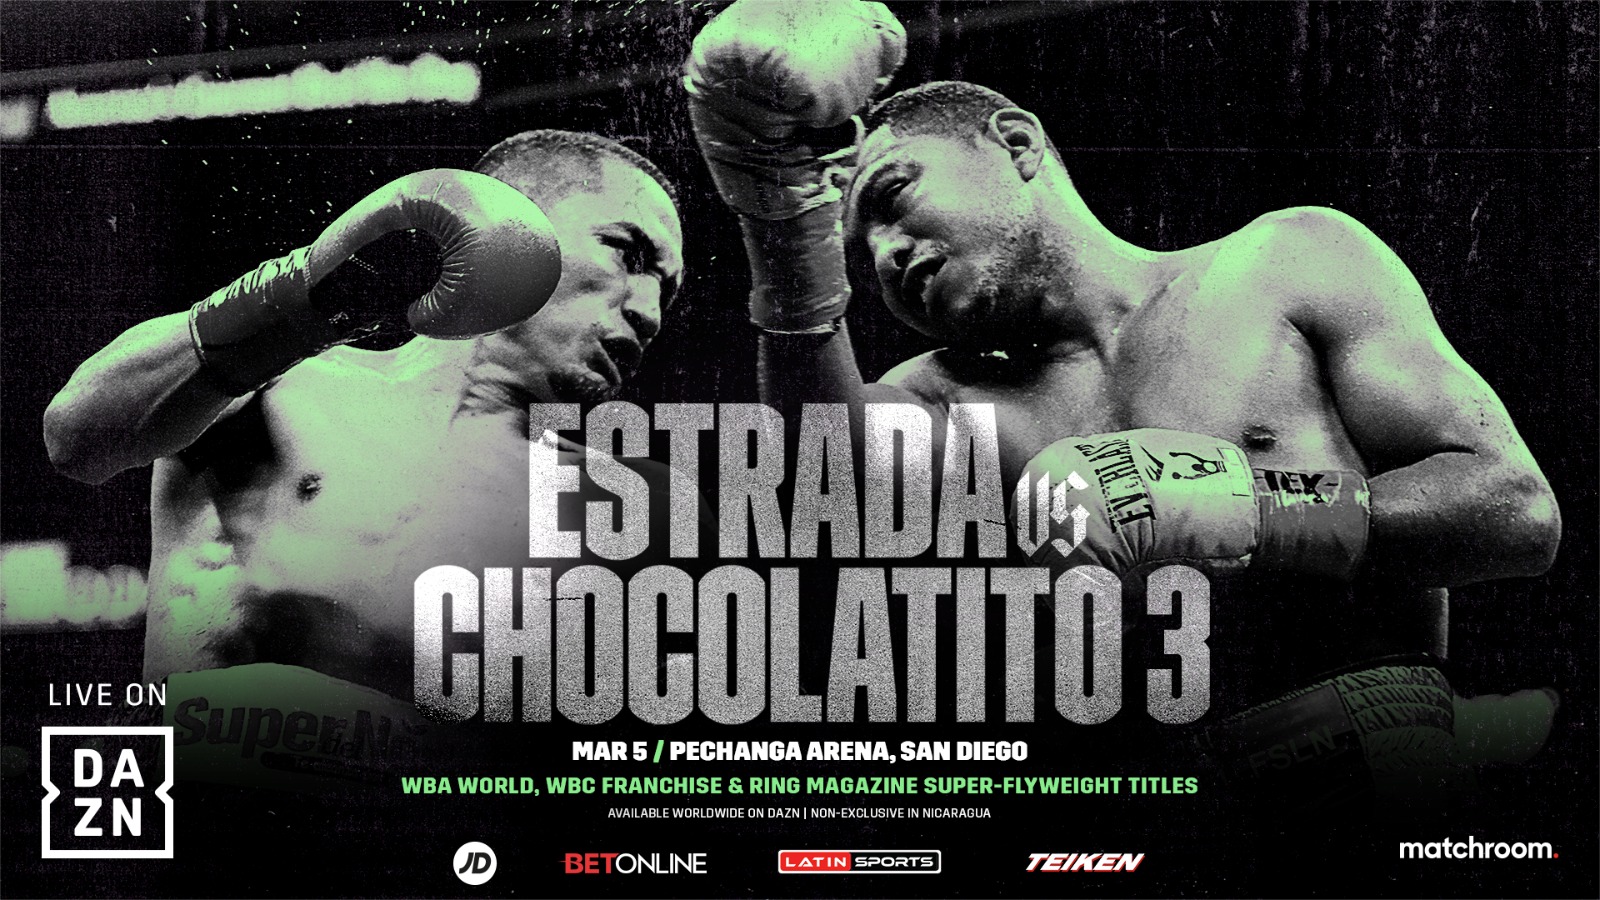 Image: Chocolatito vs Estrada 3 Live on DAZN - March 5